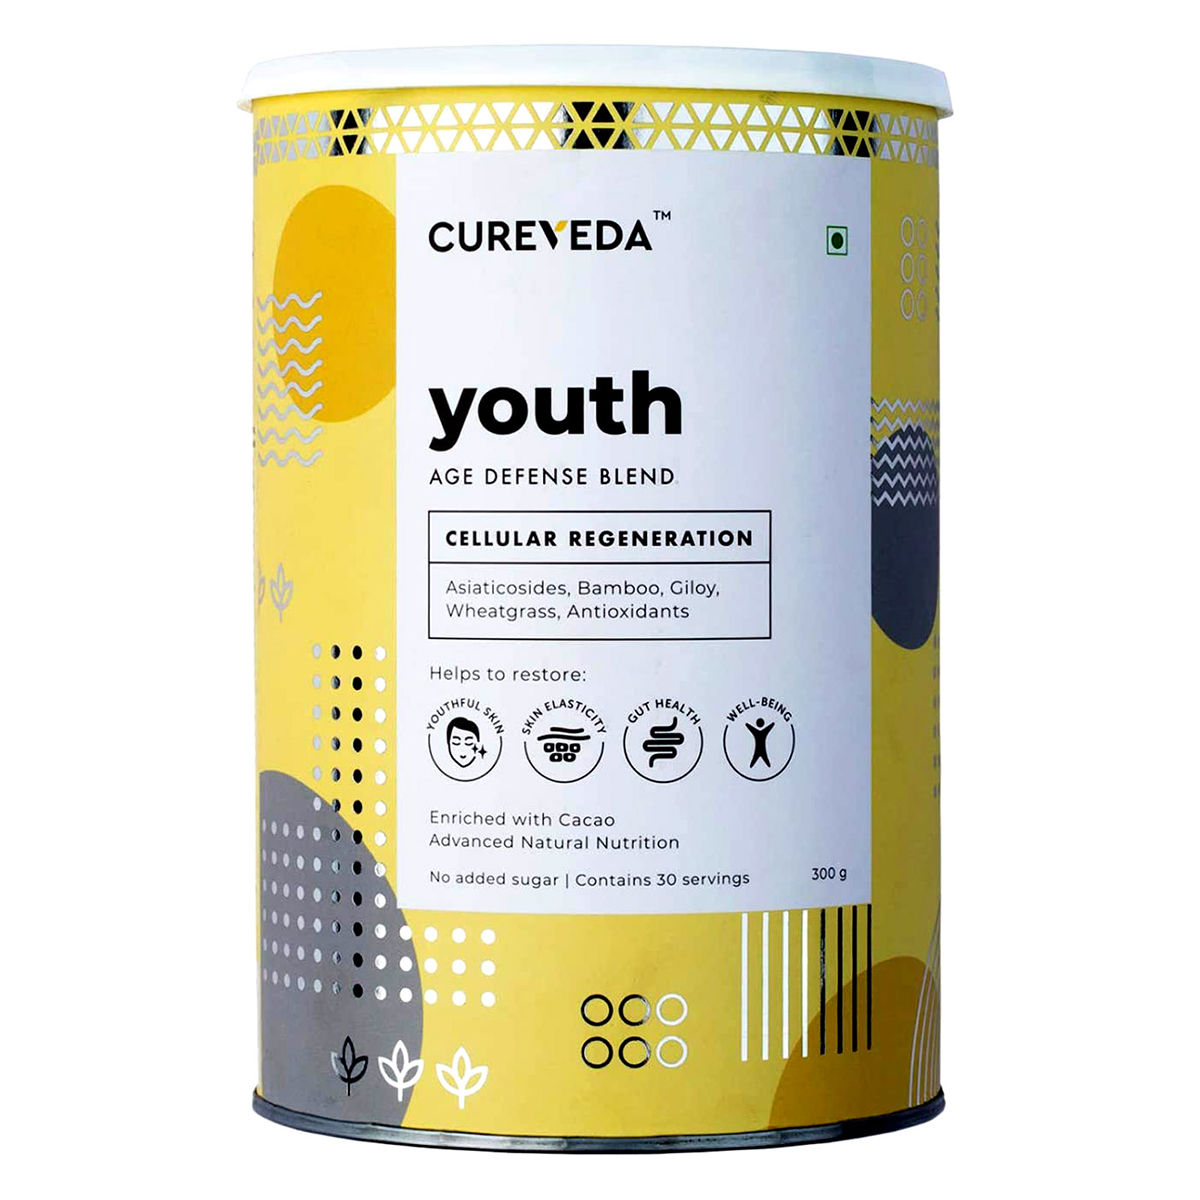 Buy Cureveda Youth Age Defense Blend, 300 gm Online